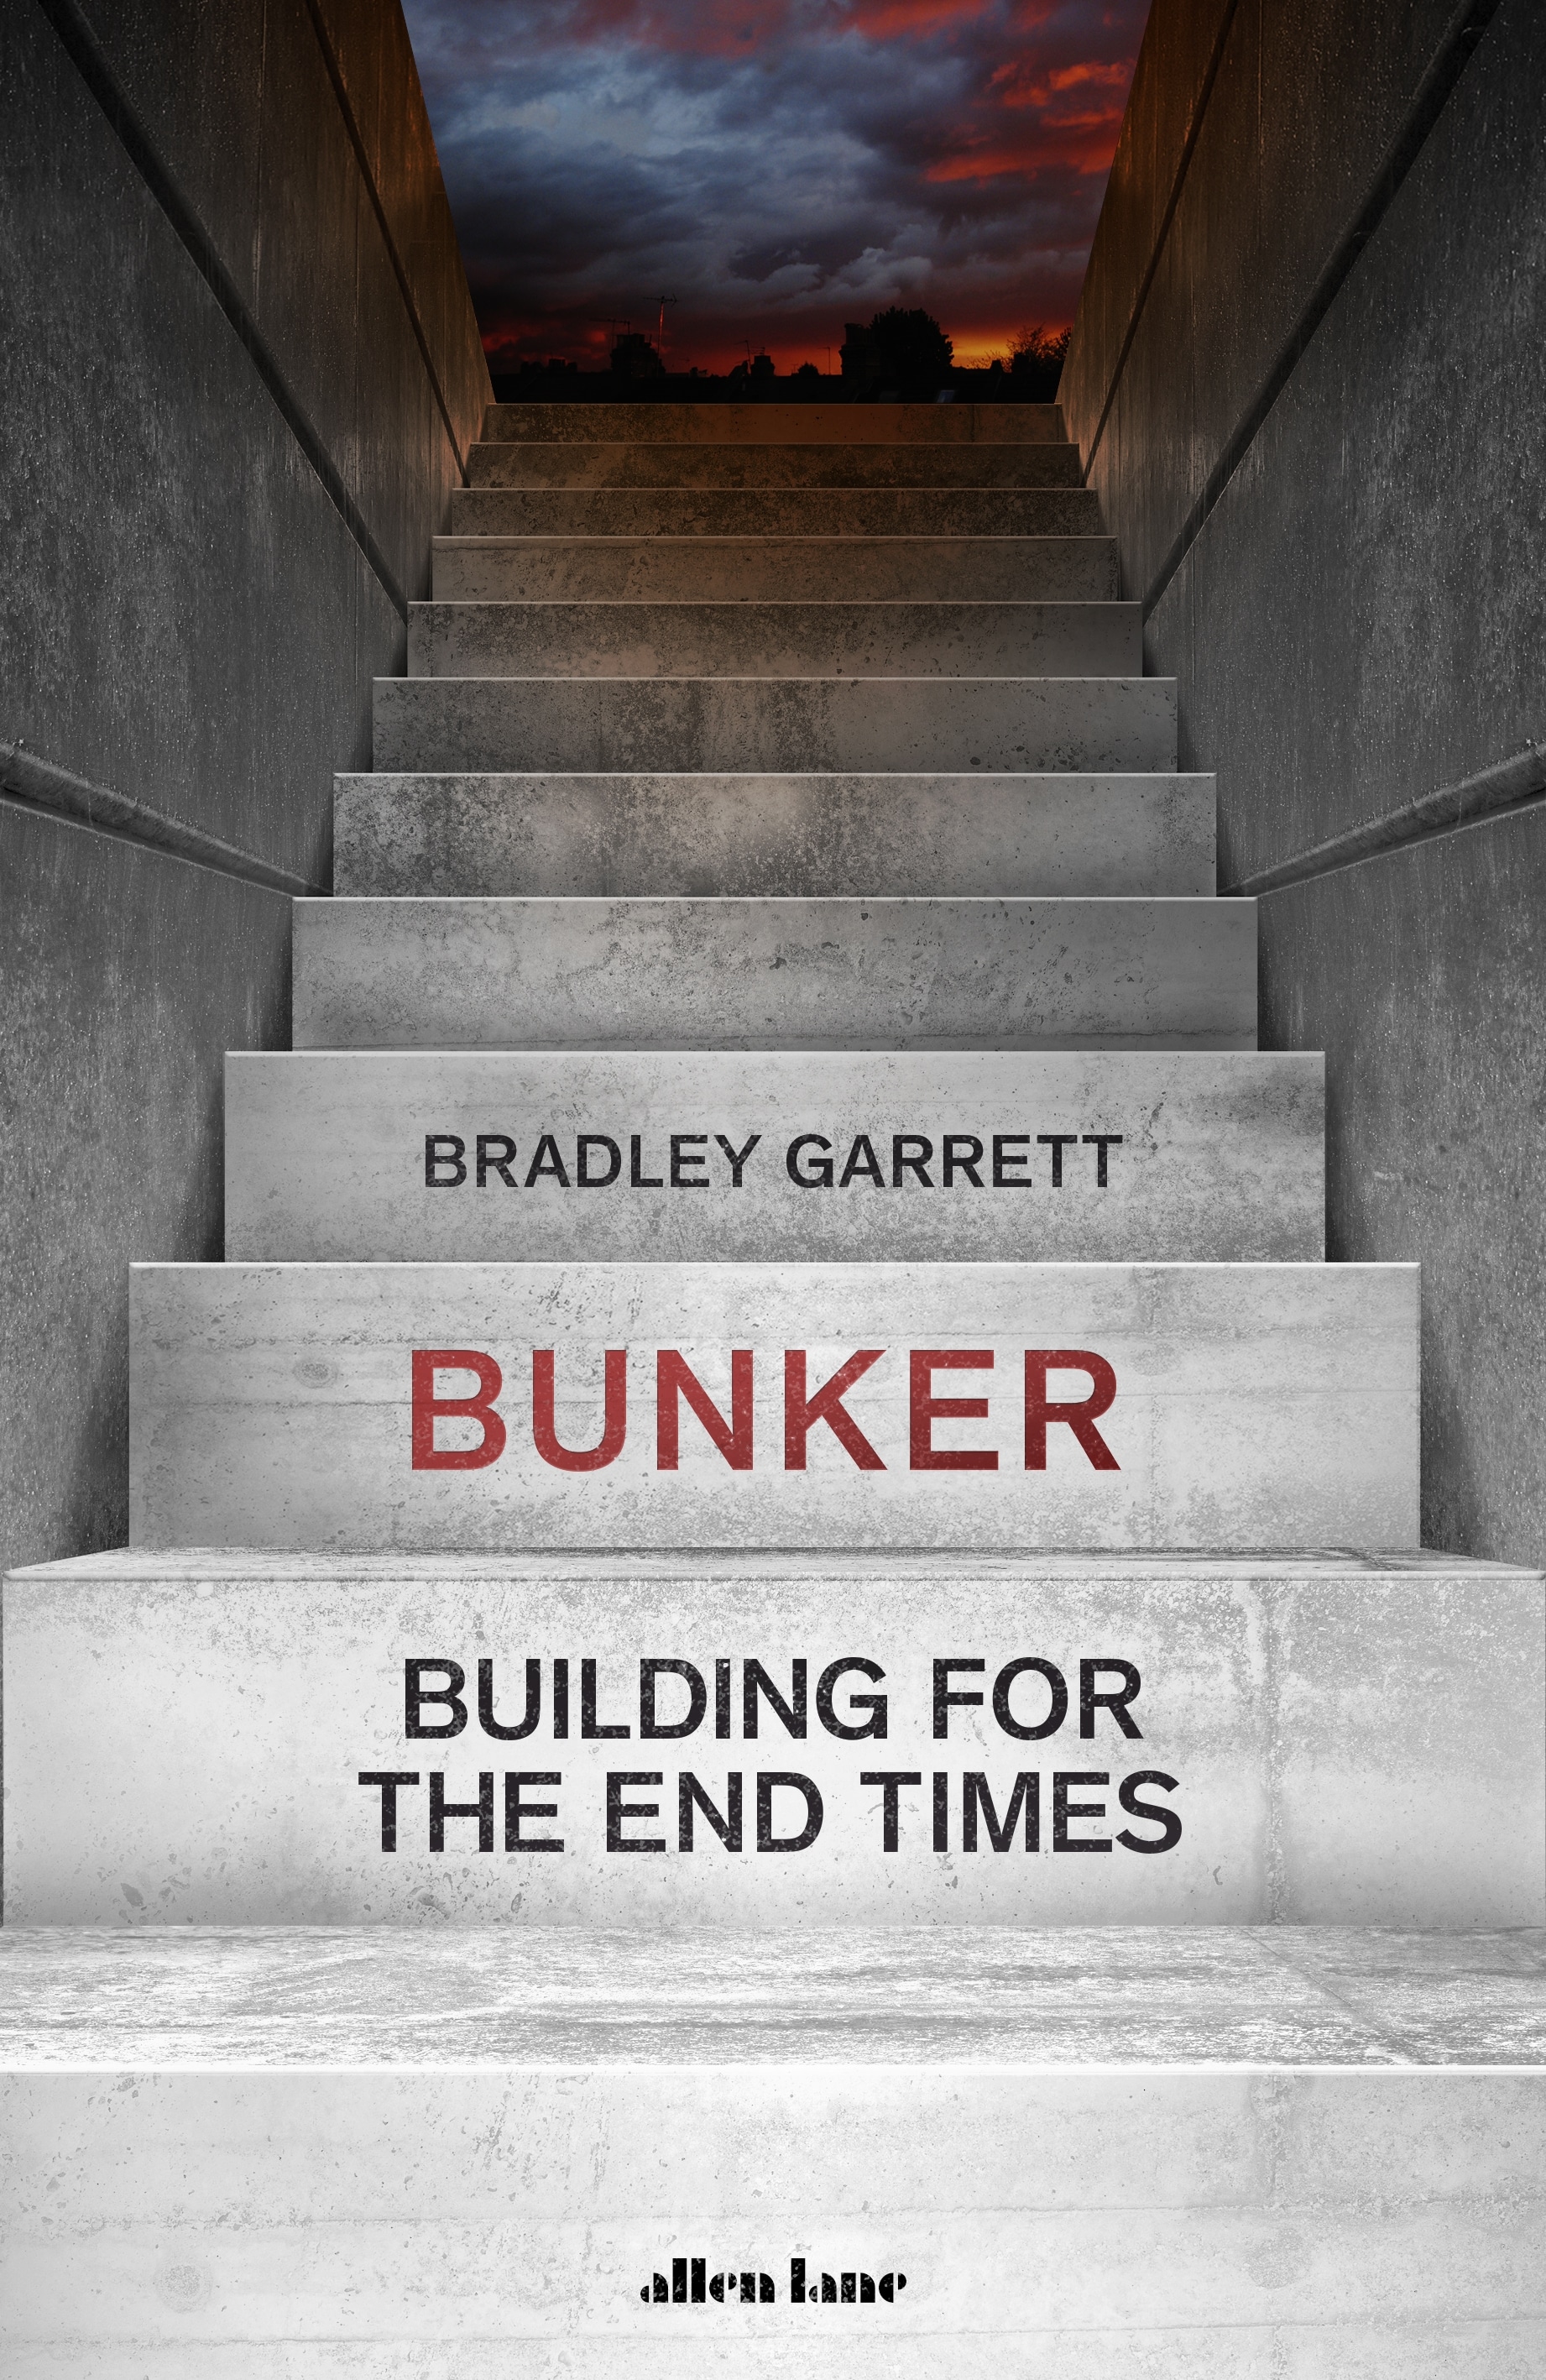 Book “Bunker” by Bradley Garrett — August 4, 2020